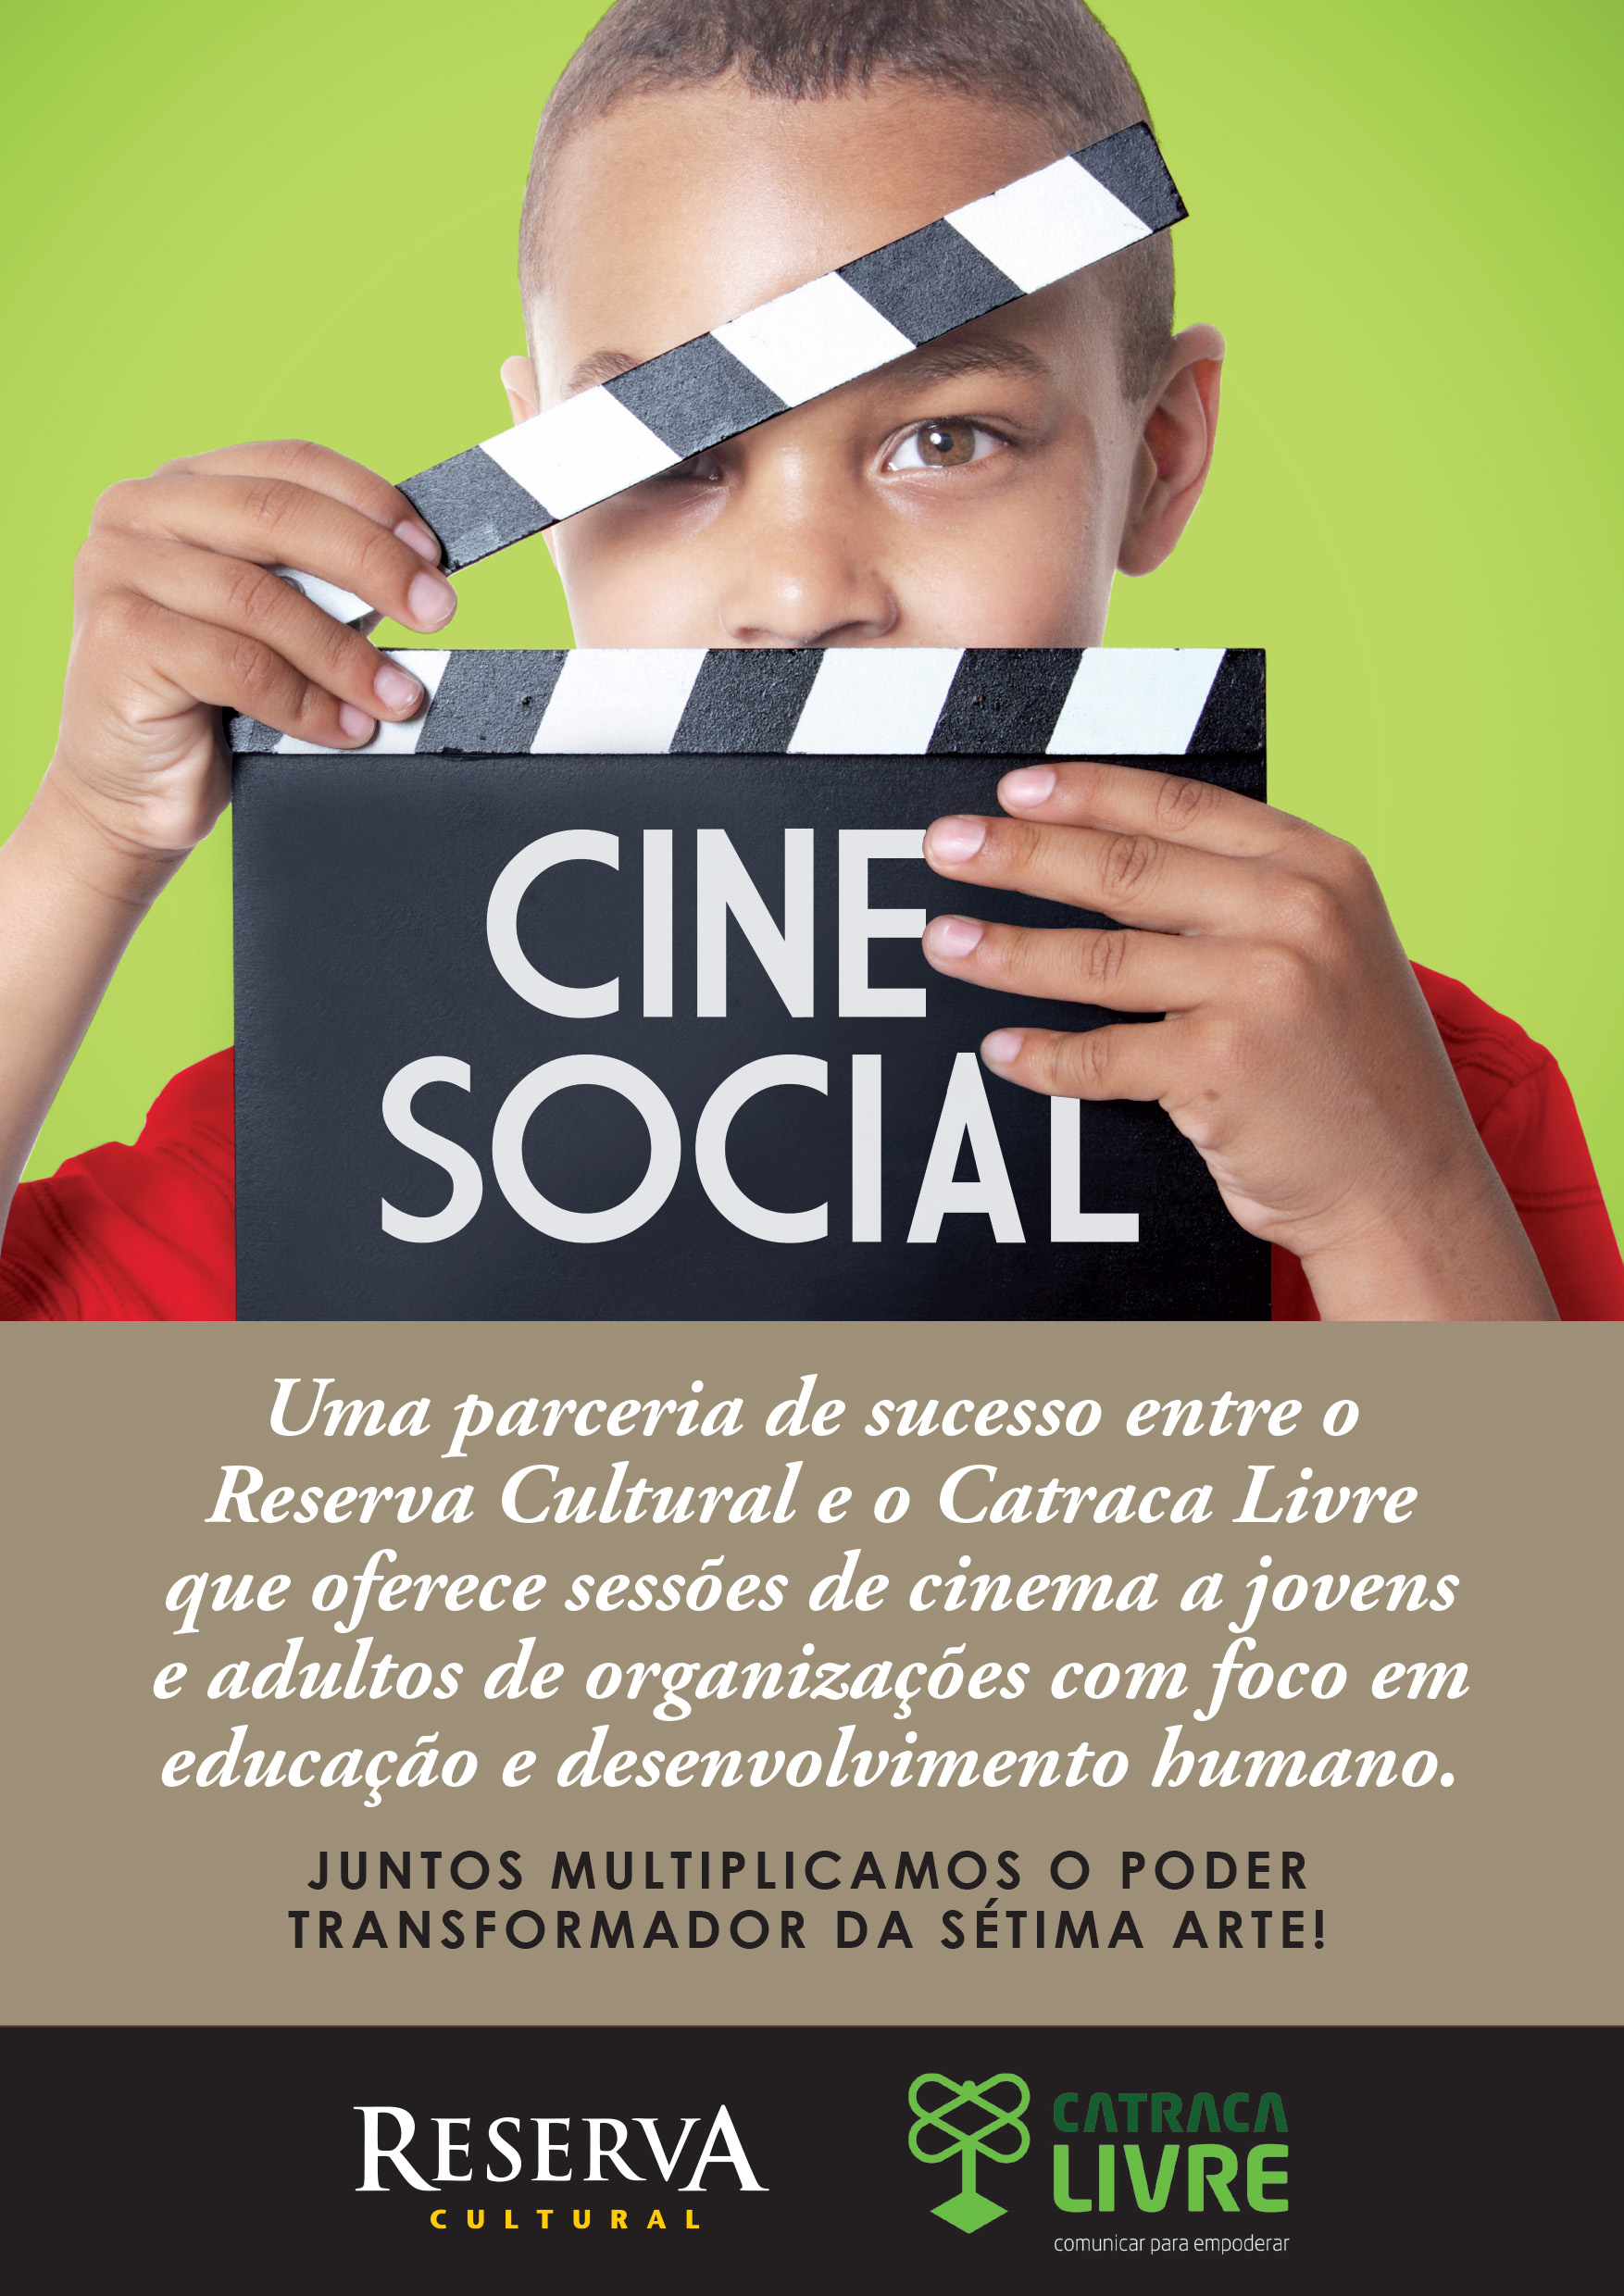 Cine Social 2015_Cartaz.indd